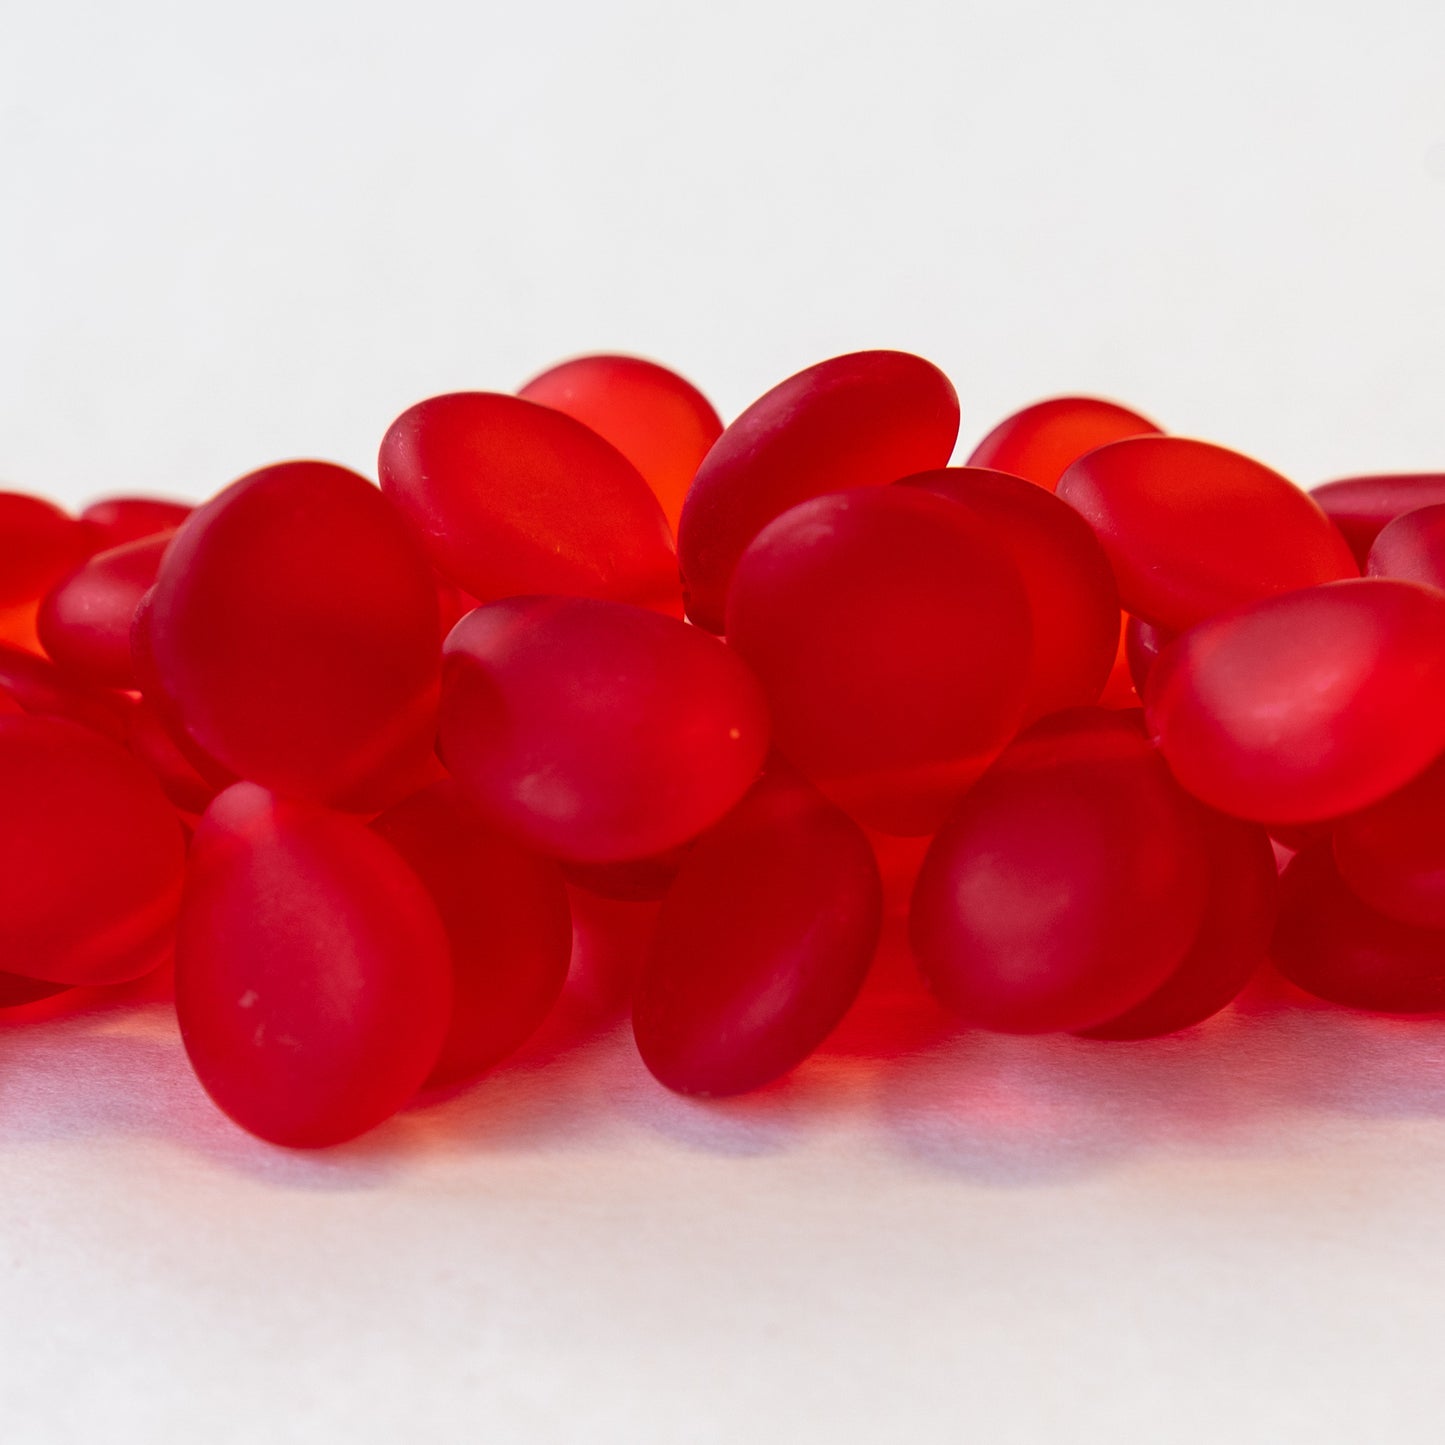 12x16mm Flat Glass Teardrop Beads - Siam Red Matte - 20 Beads